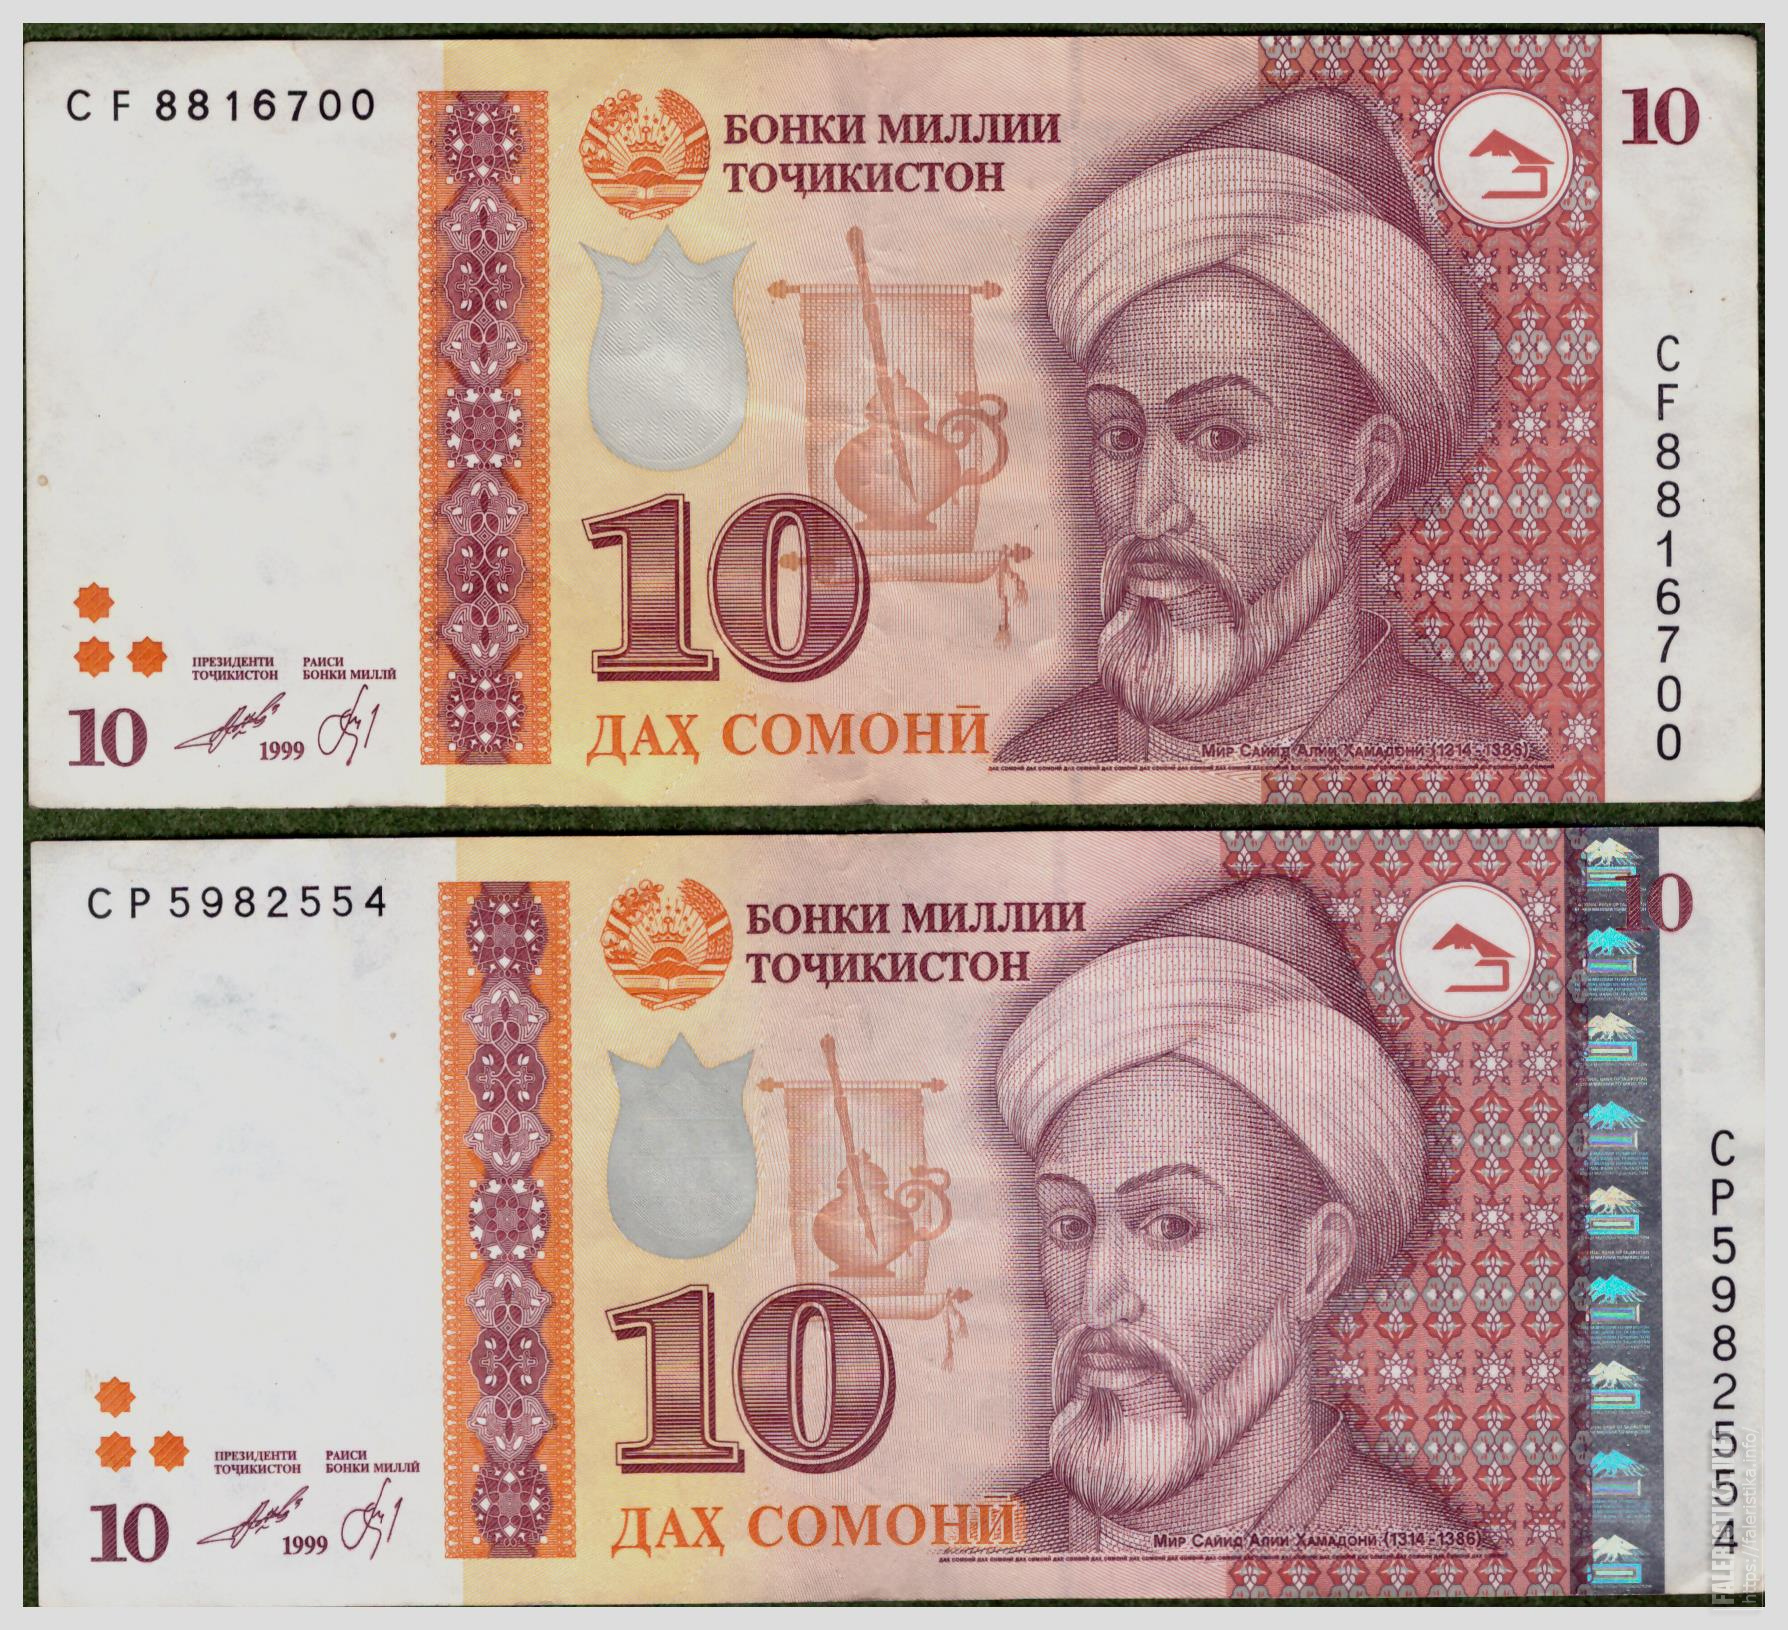 500 сомони таджикистан в рублях. Деньги Таджикистана 500 Сомони. Деньги Таджикистана 10 Сомони. Купюра Таджикистана 500 Сомони. Купюра 500 Сомони.